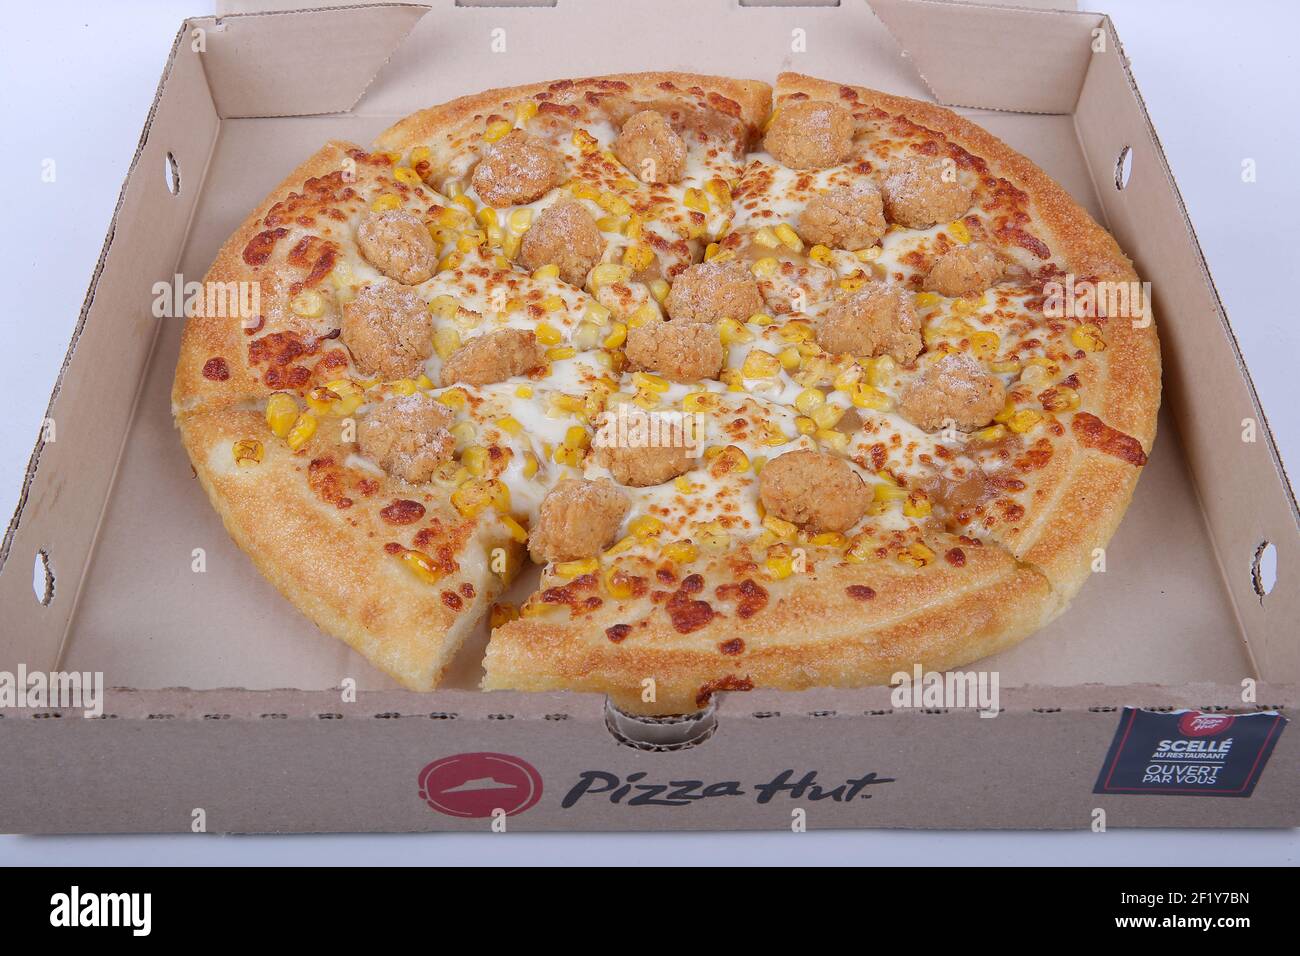 March 9 2021 - Pizza Hut Just Dropped A KFC Popcorn Chicken Pizza. London  Ontario Canada Luke Durda/Alamy Stock Photo - Alamy